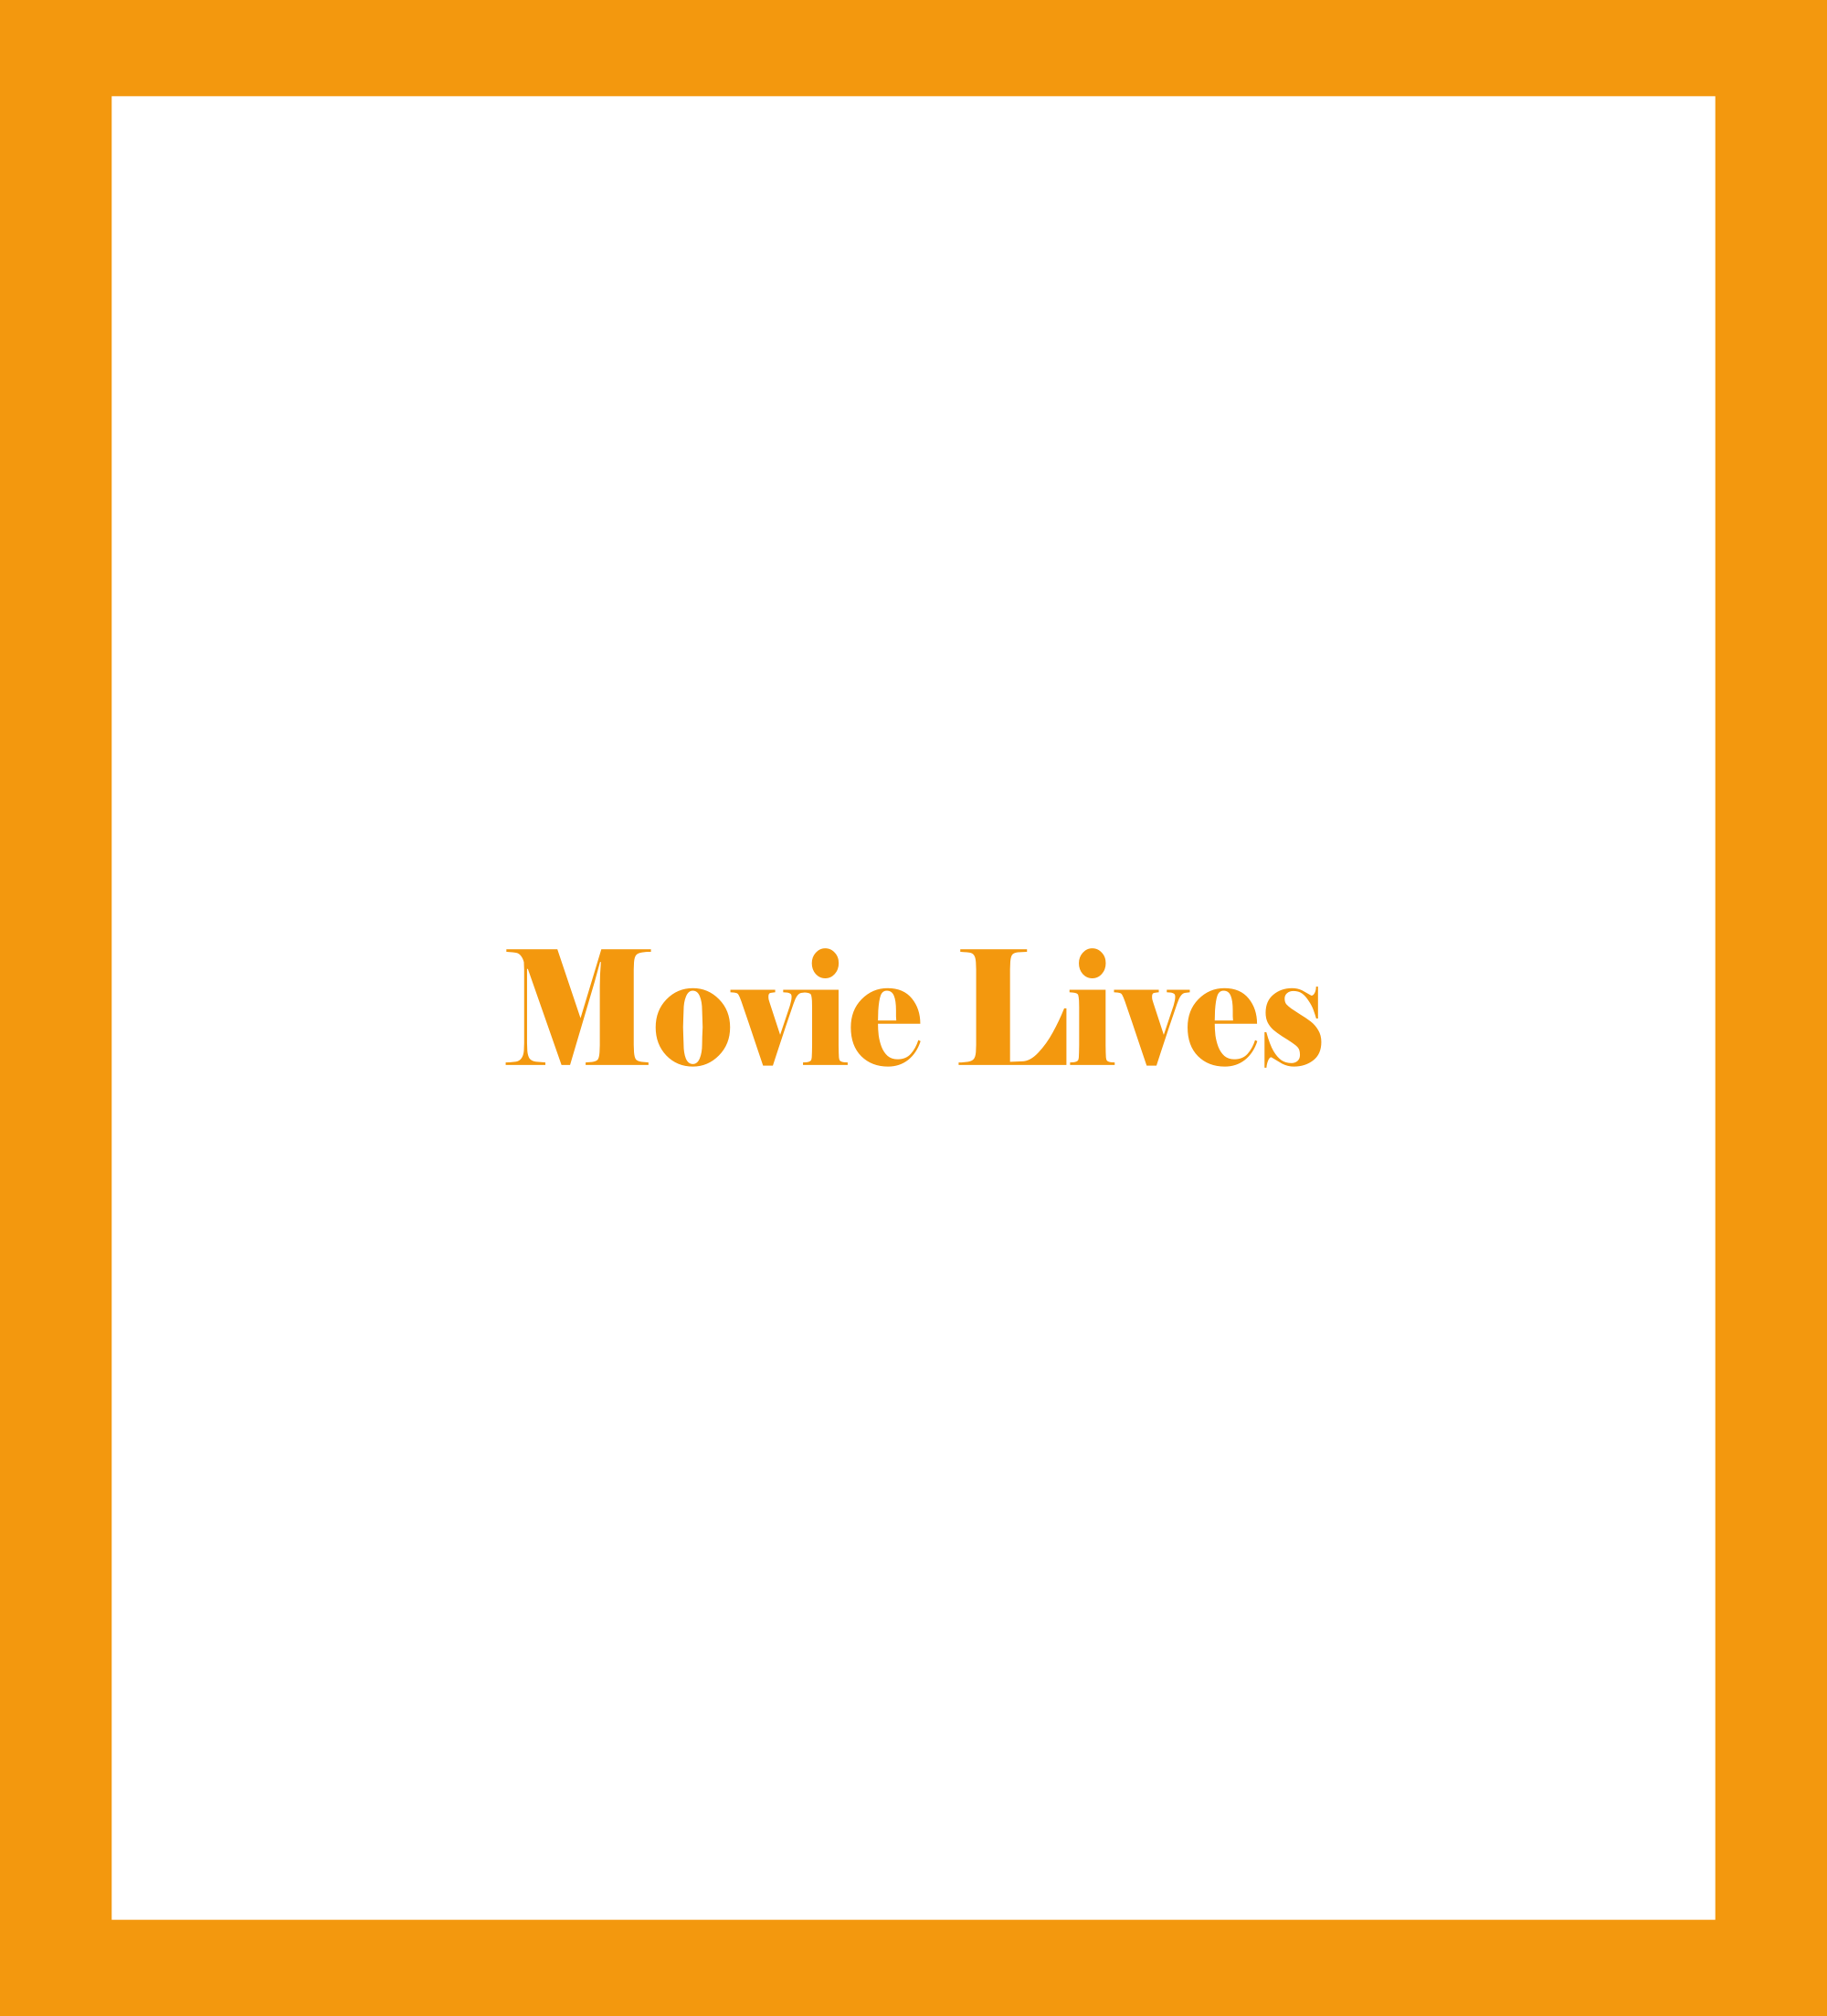 Movie Lives